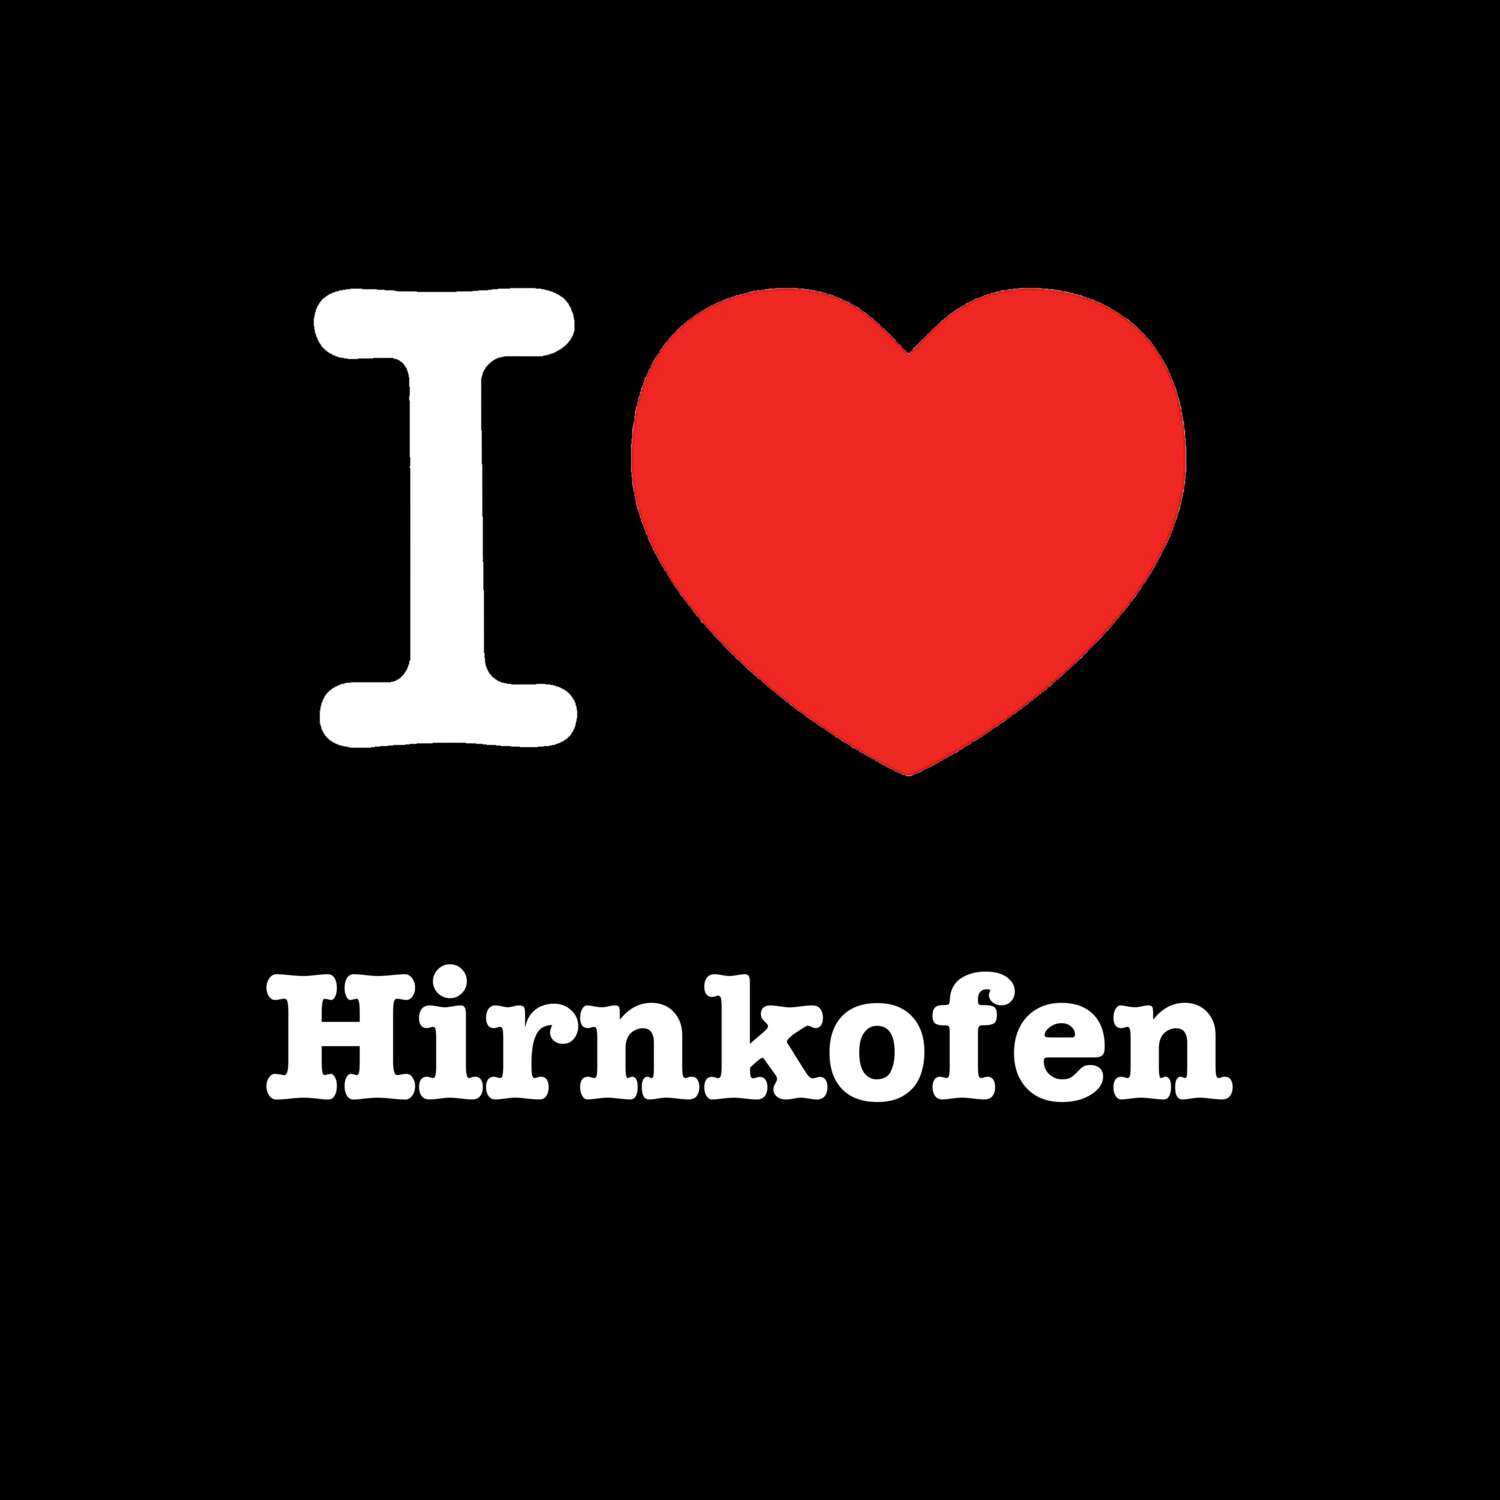 Hirnkofen T-Shirt »I love«